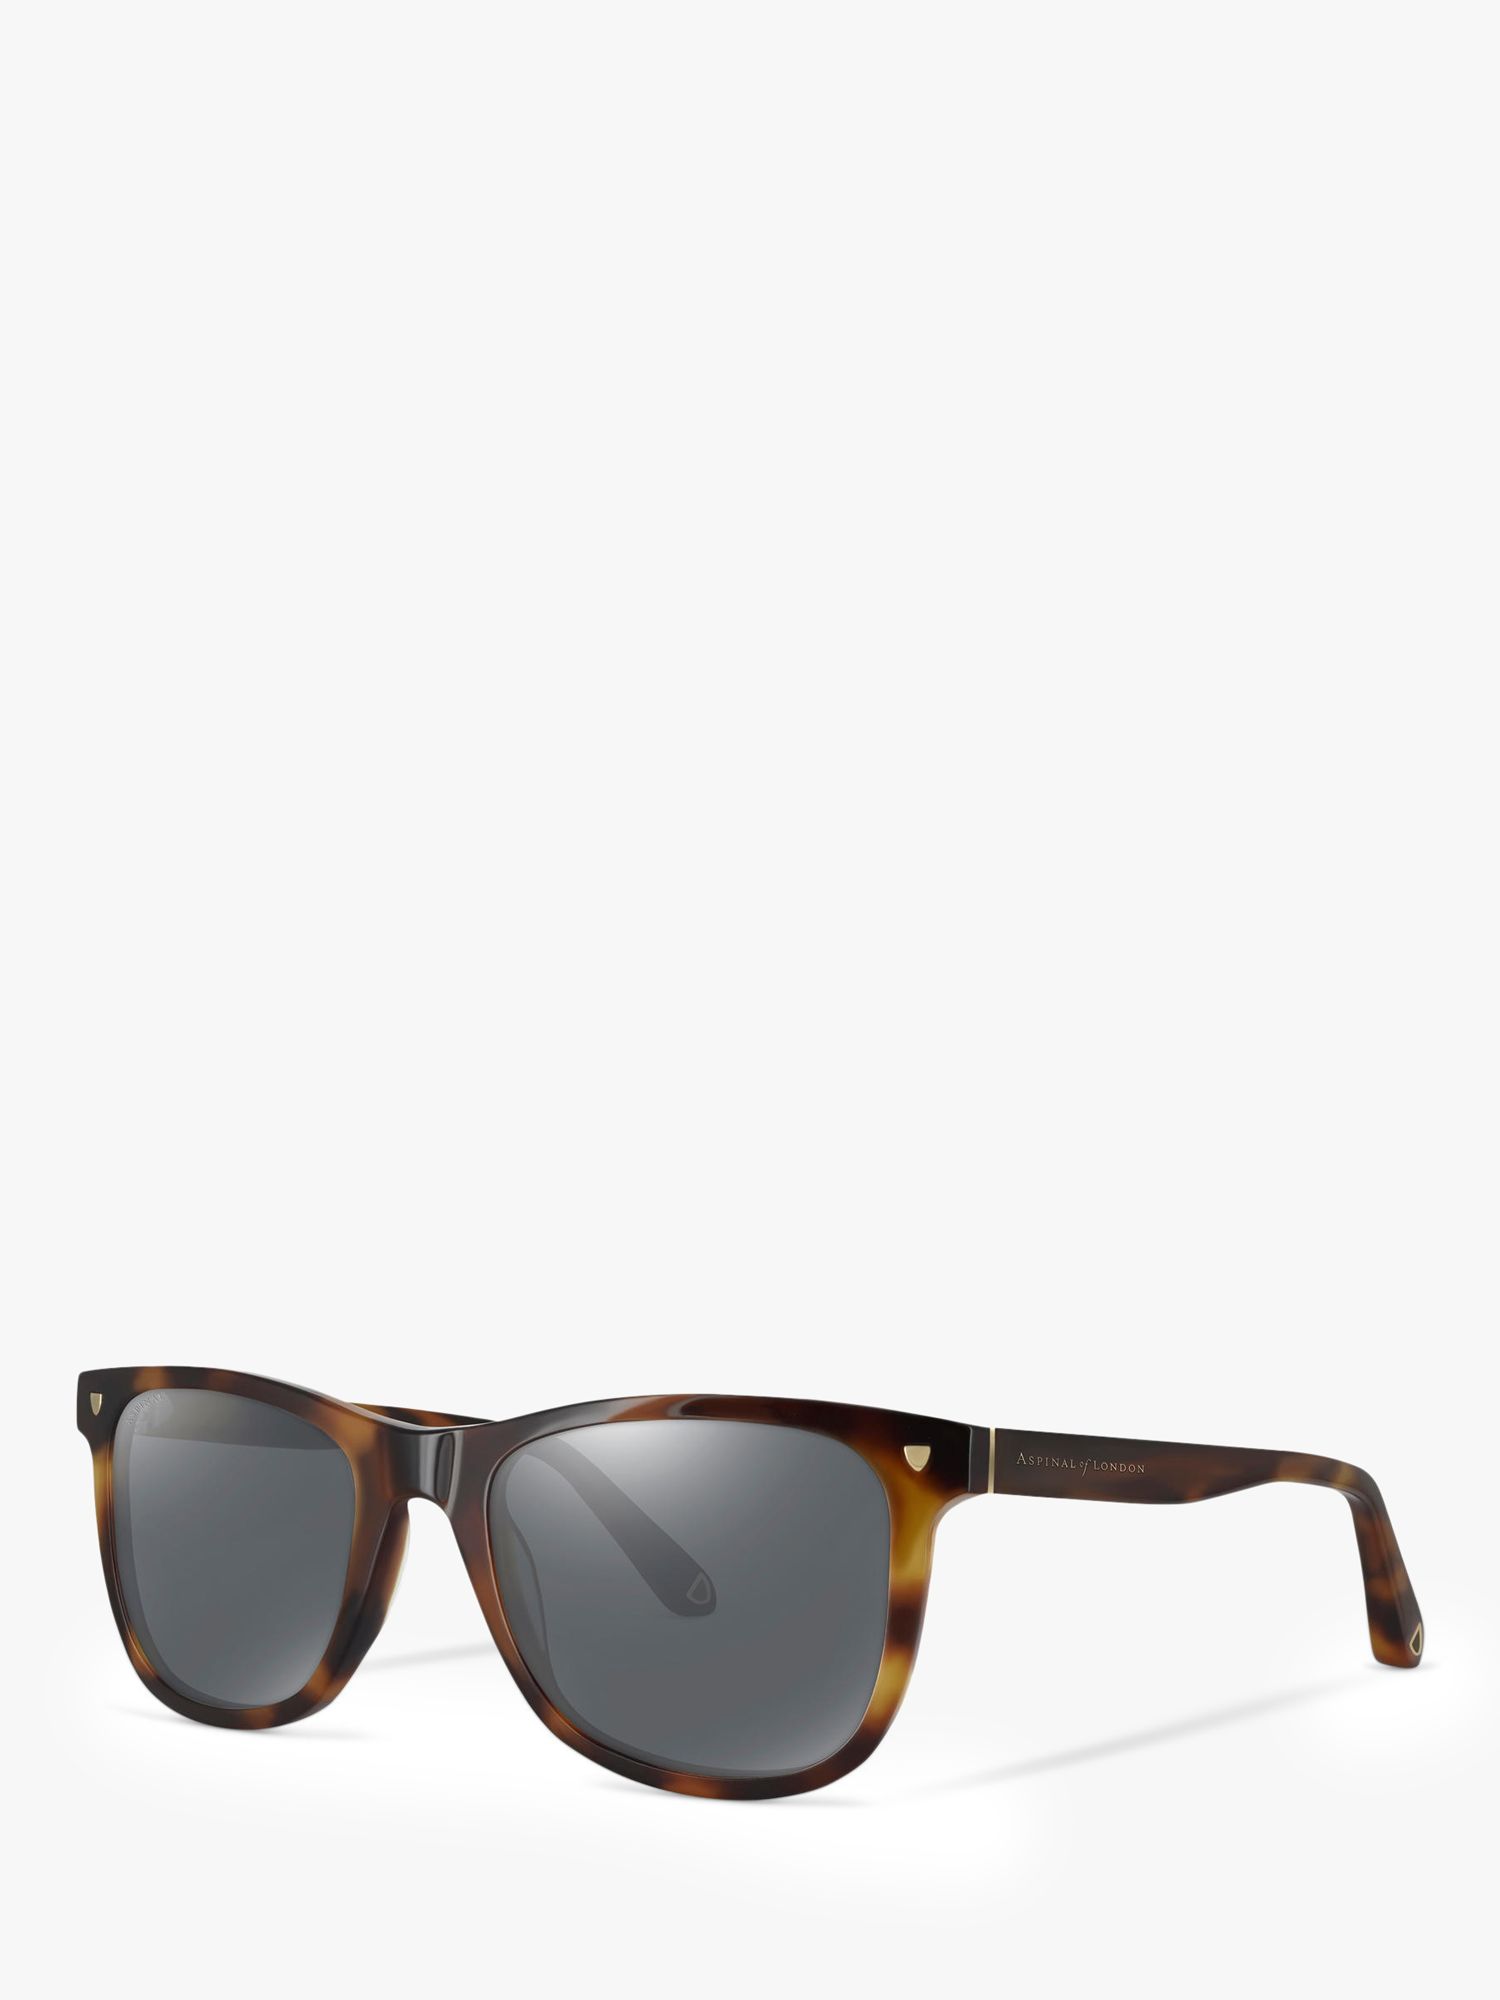 Aspinal of London Men's Milano D-Frame Sunglasses, Tortoiseshell